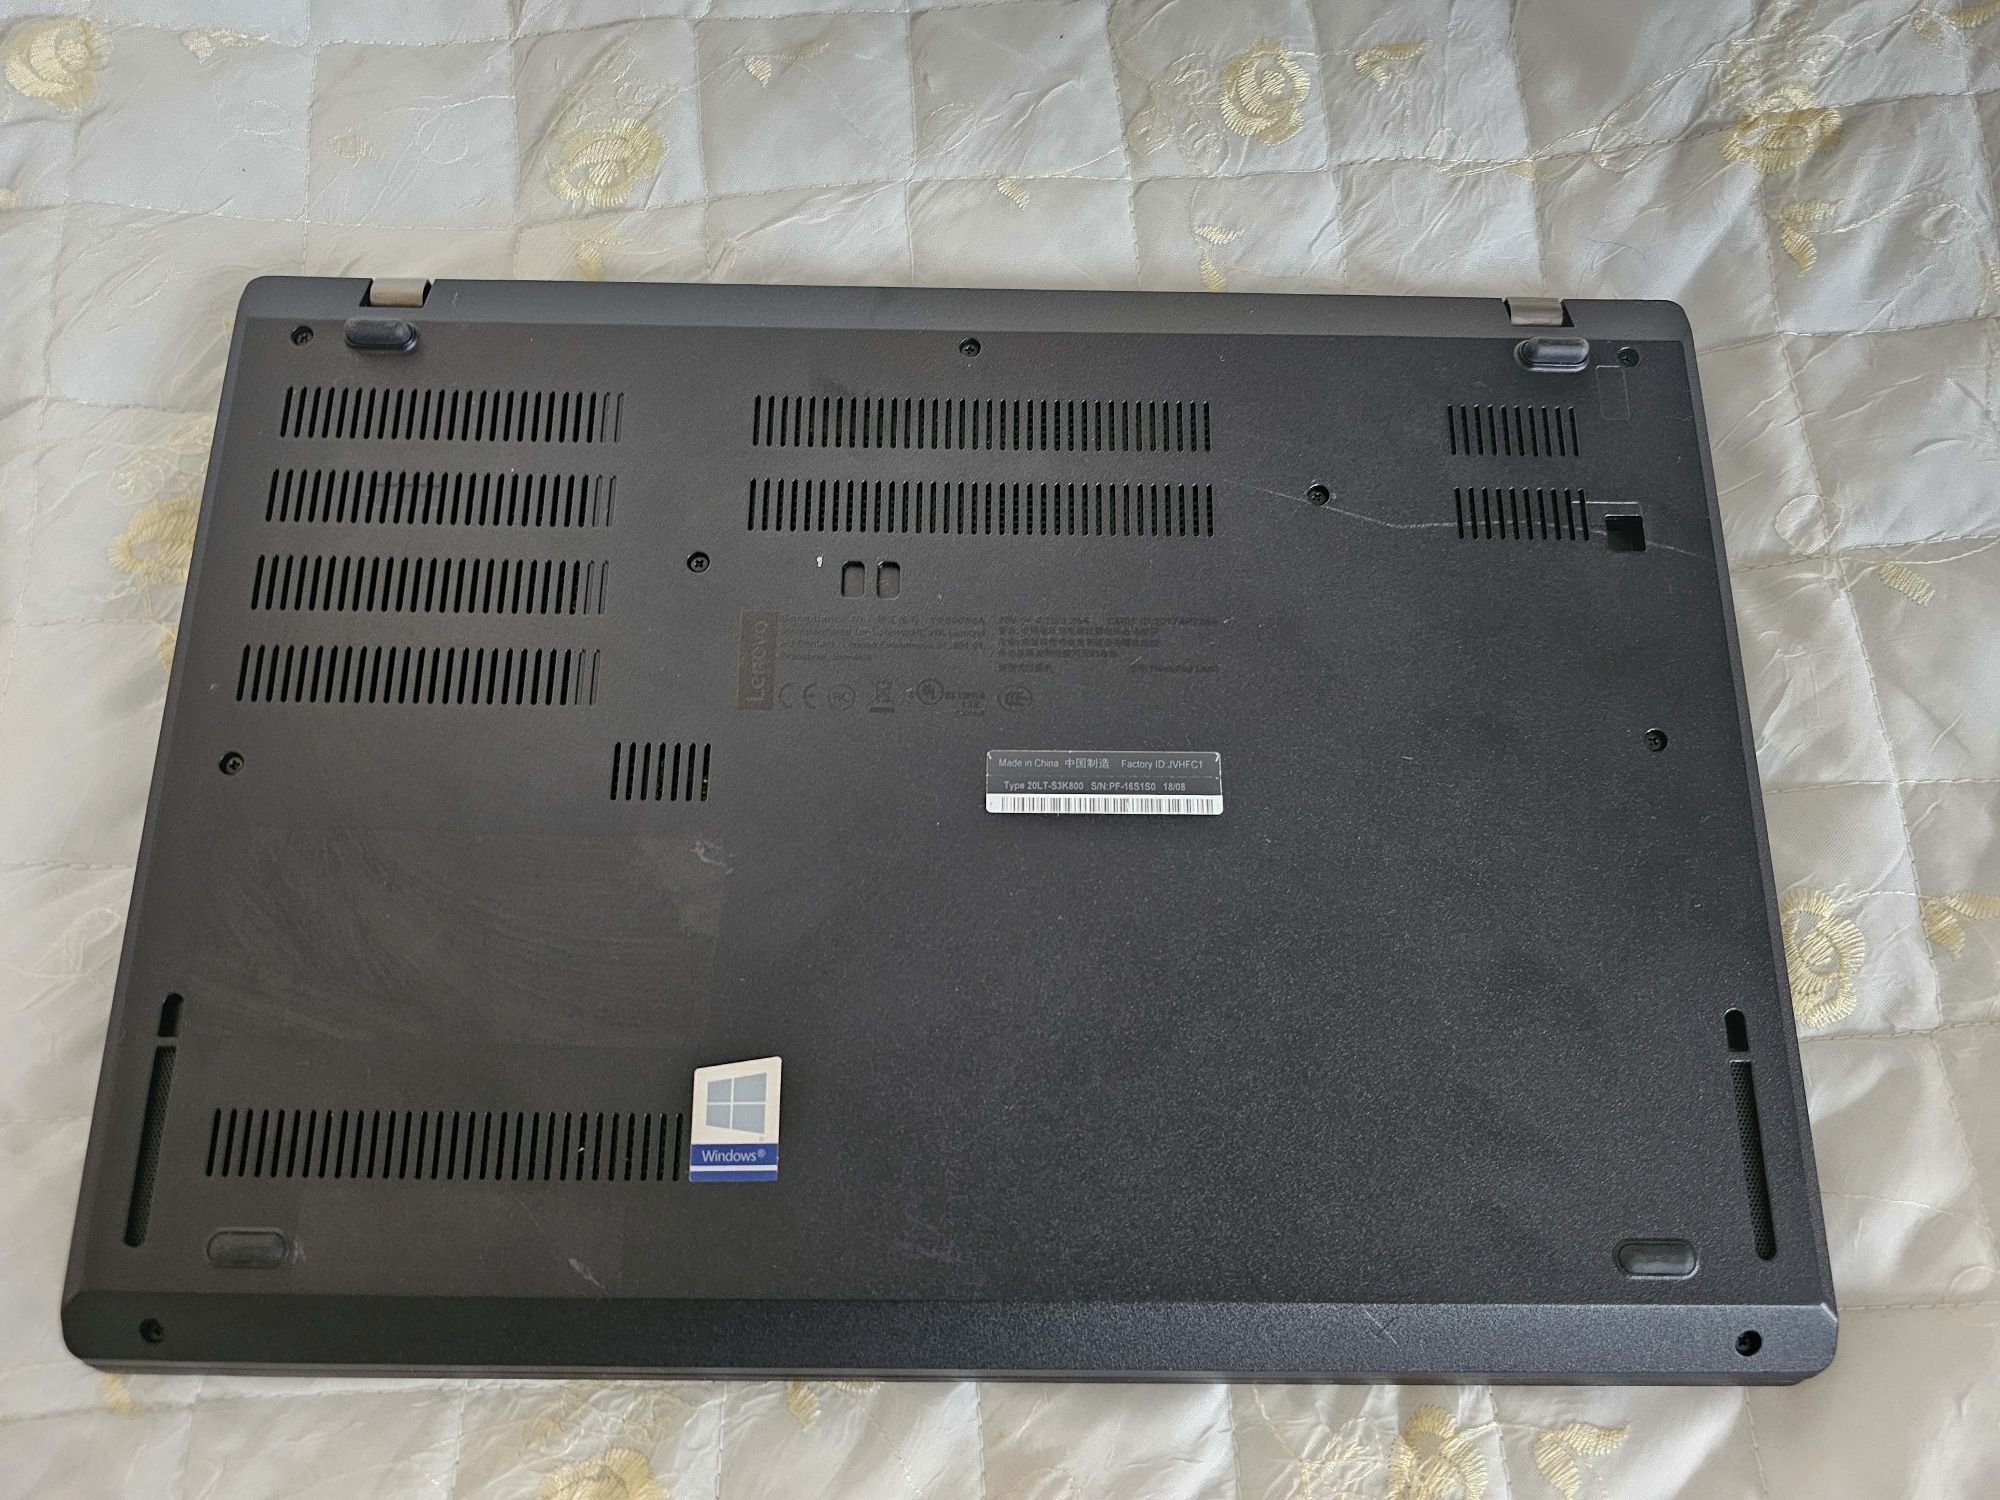 Laptop Lenovo ThinkPad 480 i5-8250 8/16GB RAM dysk SSD bateria 6 godz